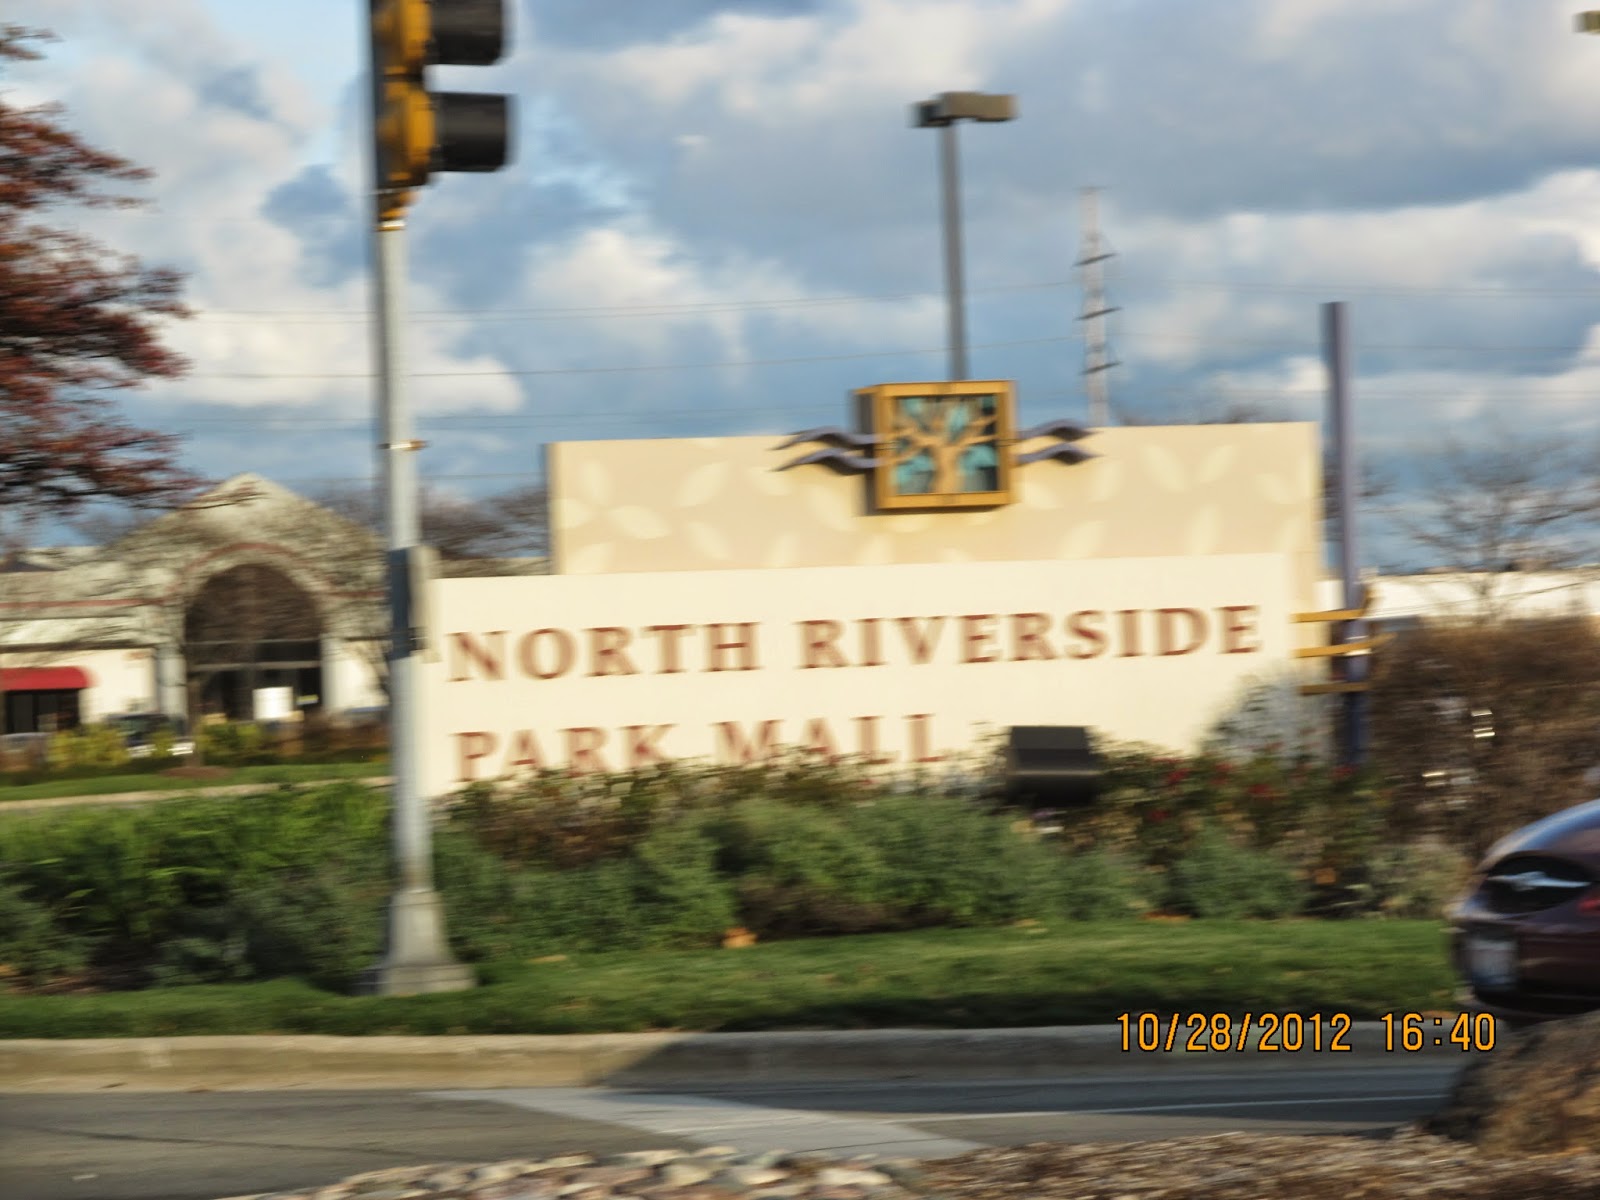 North Riverside Park Mall shopping plan  North riverside, Riverside park,  Riverside